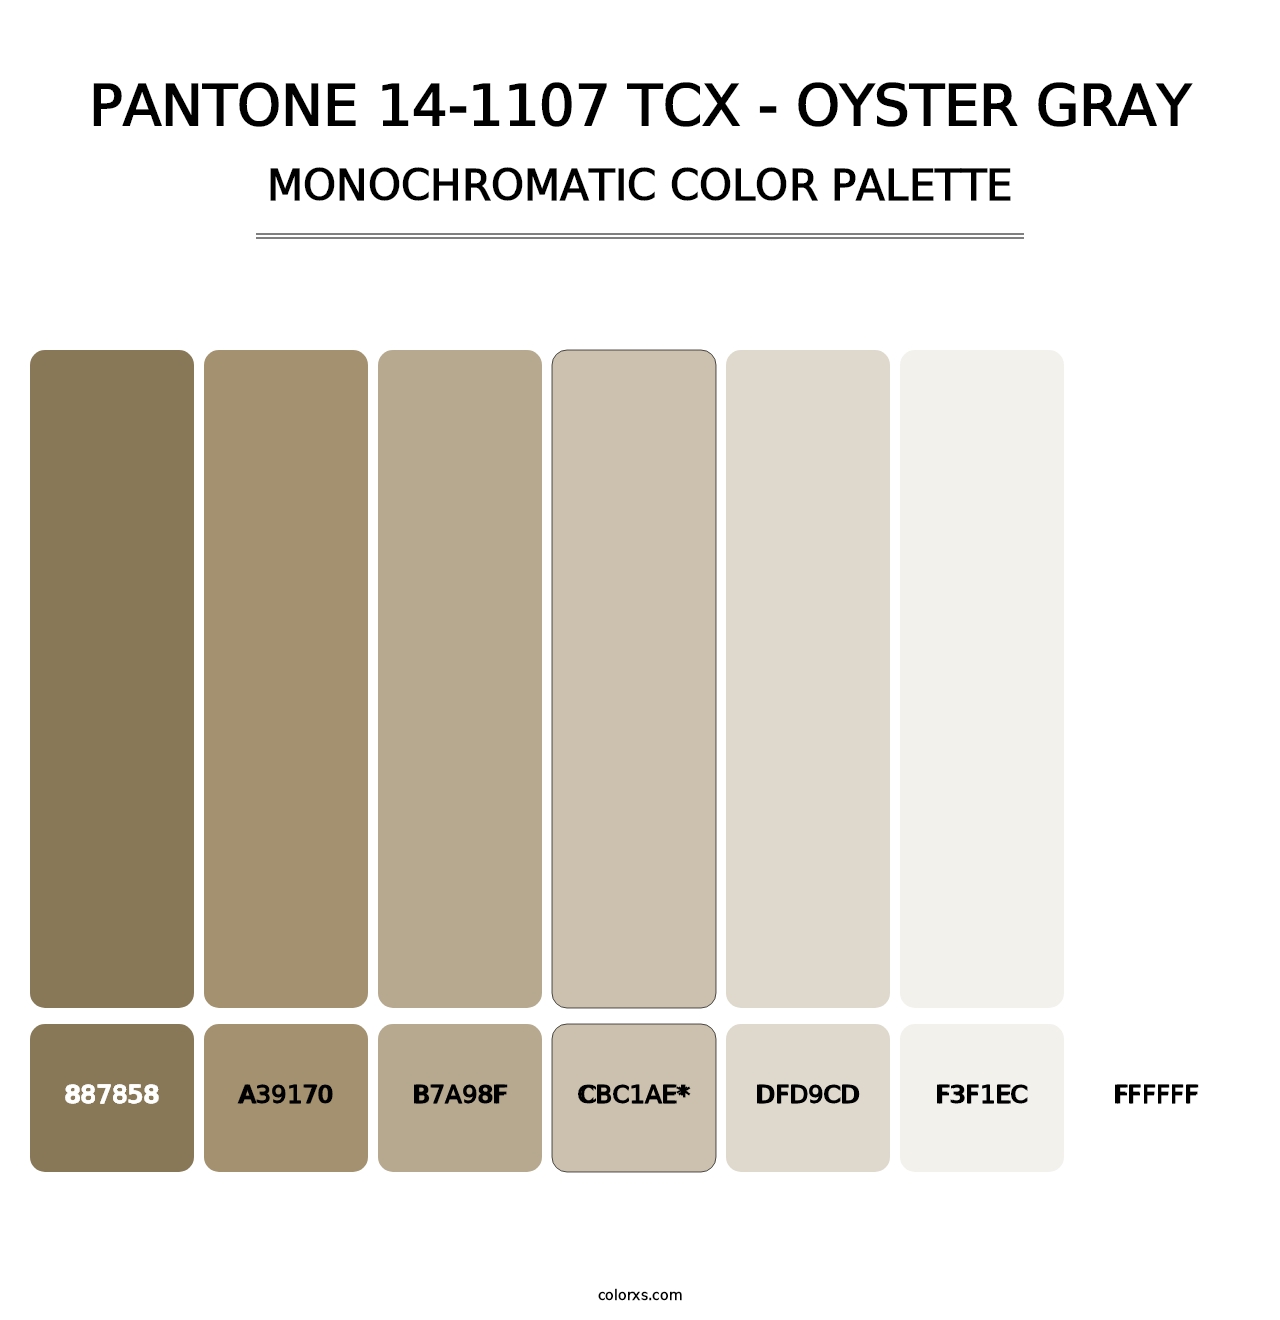 PANTONE 14-1107 TCX - Oyster Gray - Monochromatic Color Palette